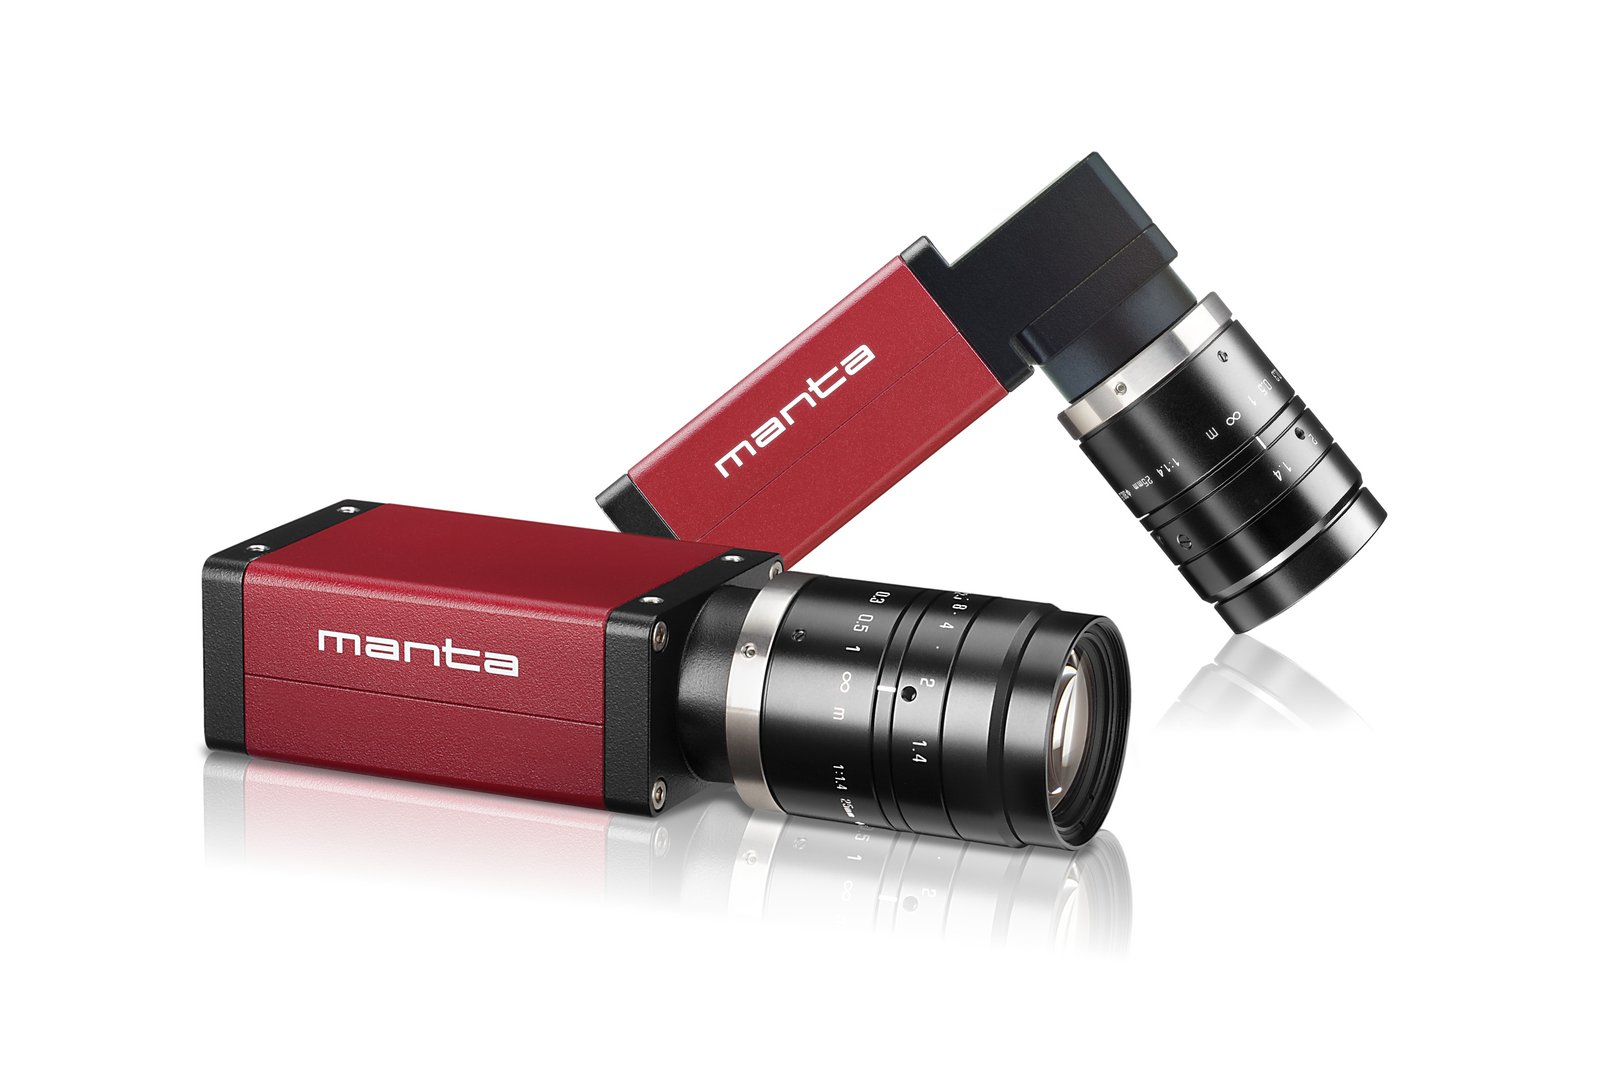 Flexible and modular - Allied Vision's Manta camera